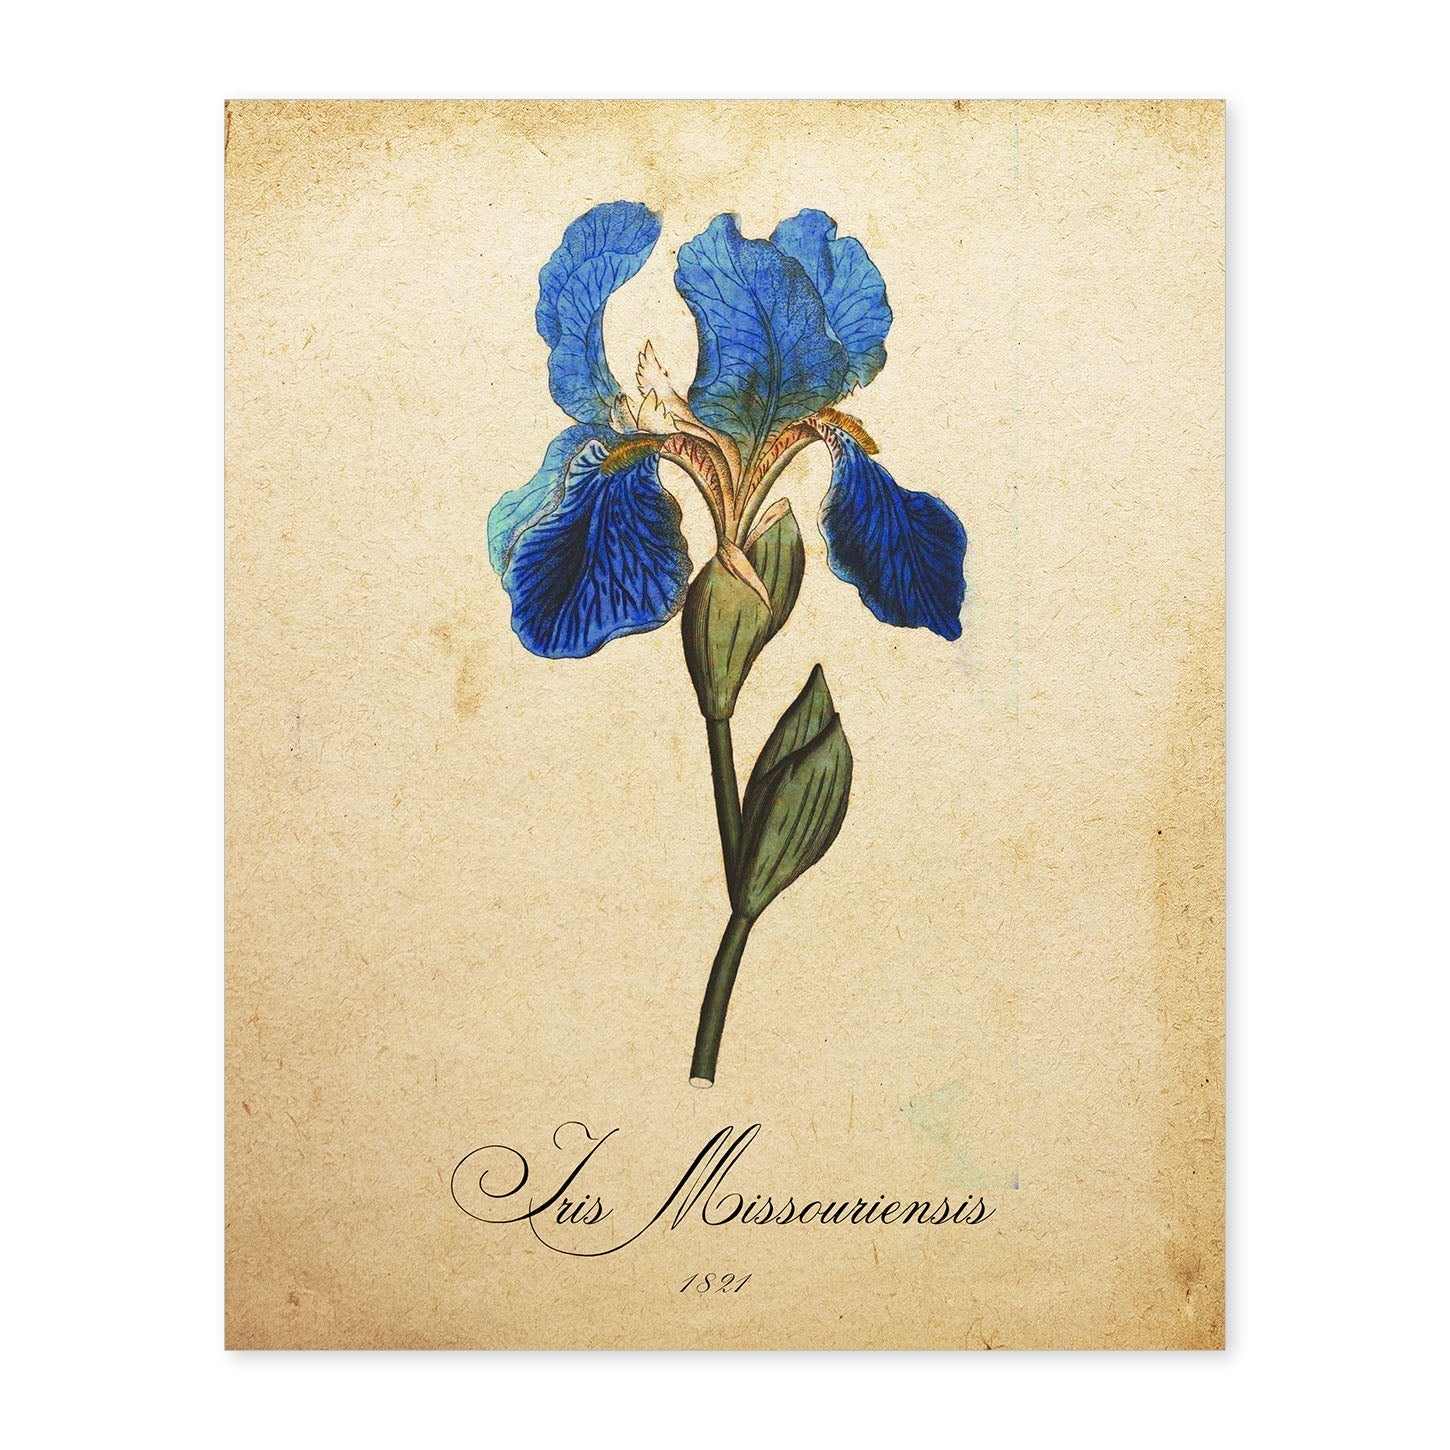 Poster de flores vintage. Lámina Iris missouriensis con diseño vintage.-Artwork-Nacnic-A4-Sin marco-Nacnic Estudio SL